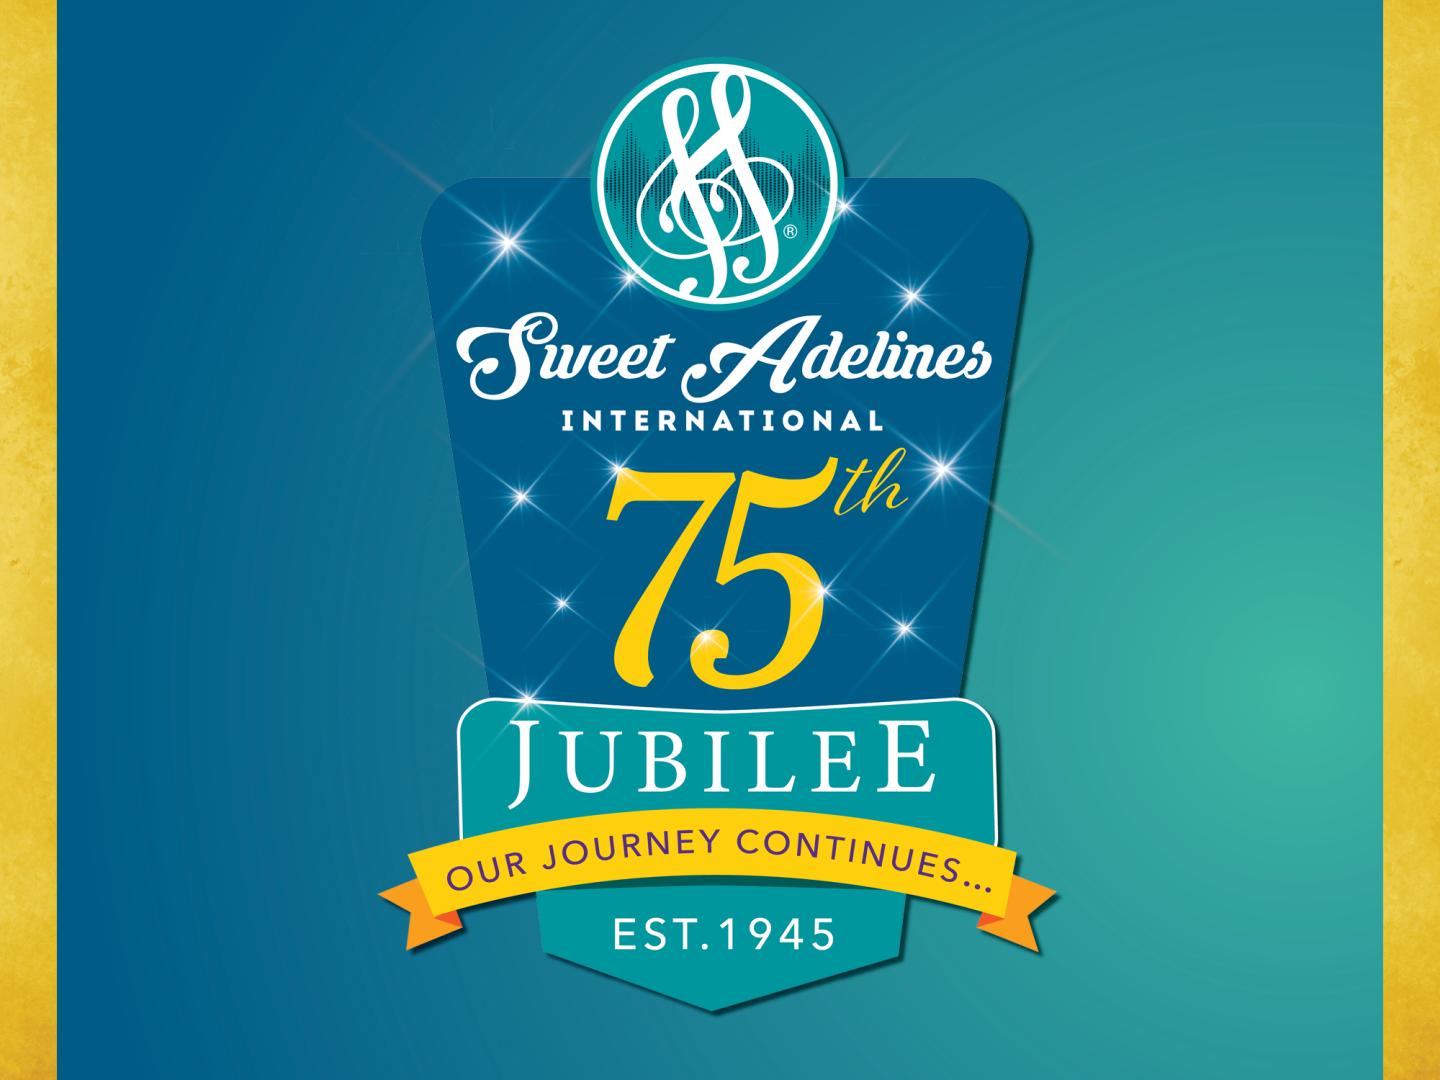 Sweet Adelines 75th Anniversary Celebration